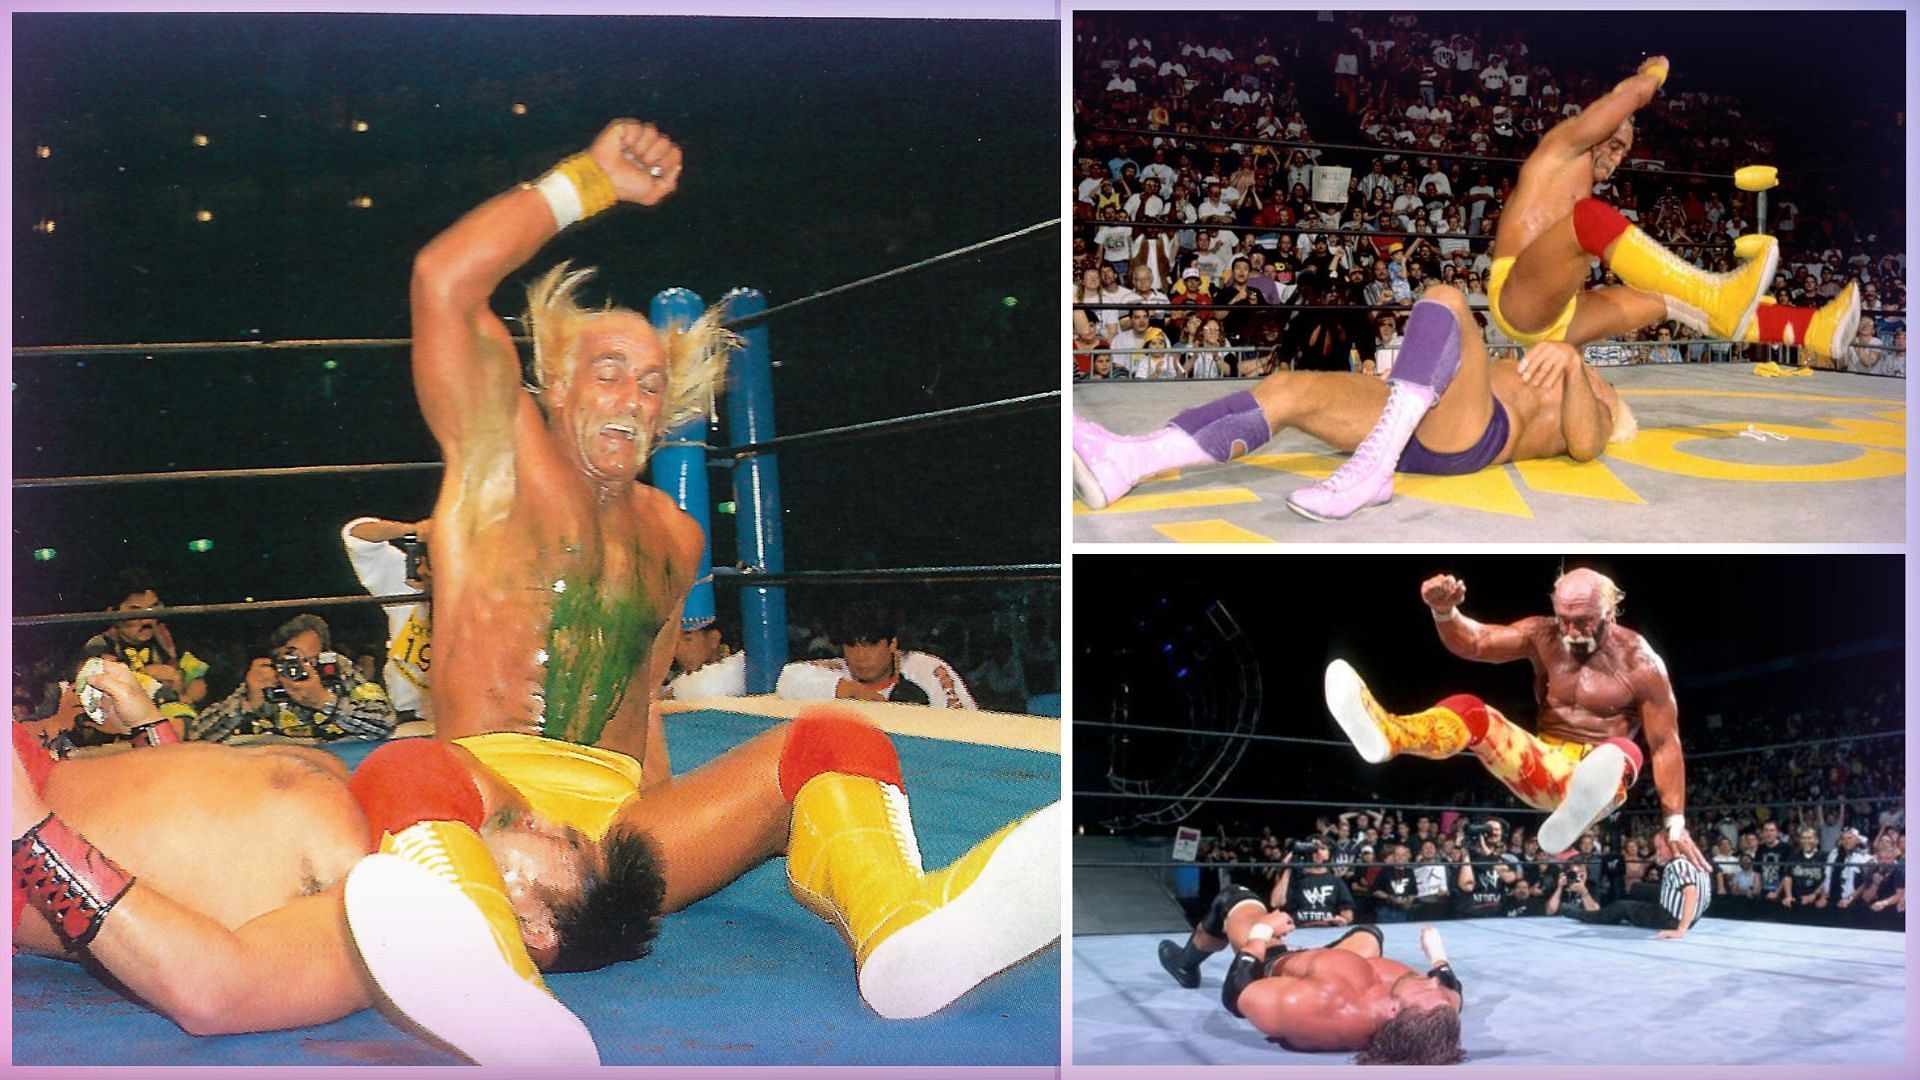 WWE Superstar and Hall of Famer Hulk Hogan performing his log kick